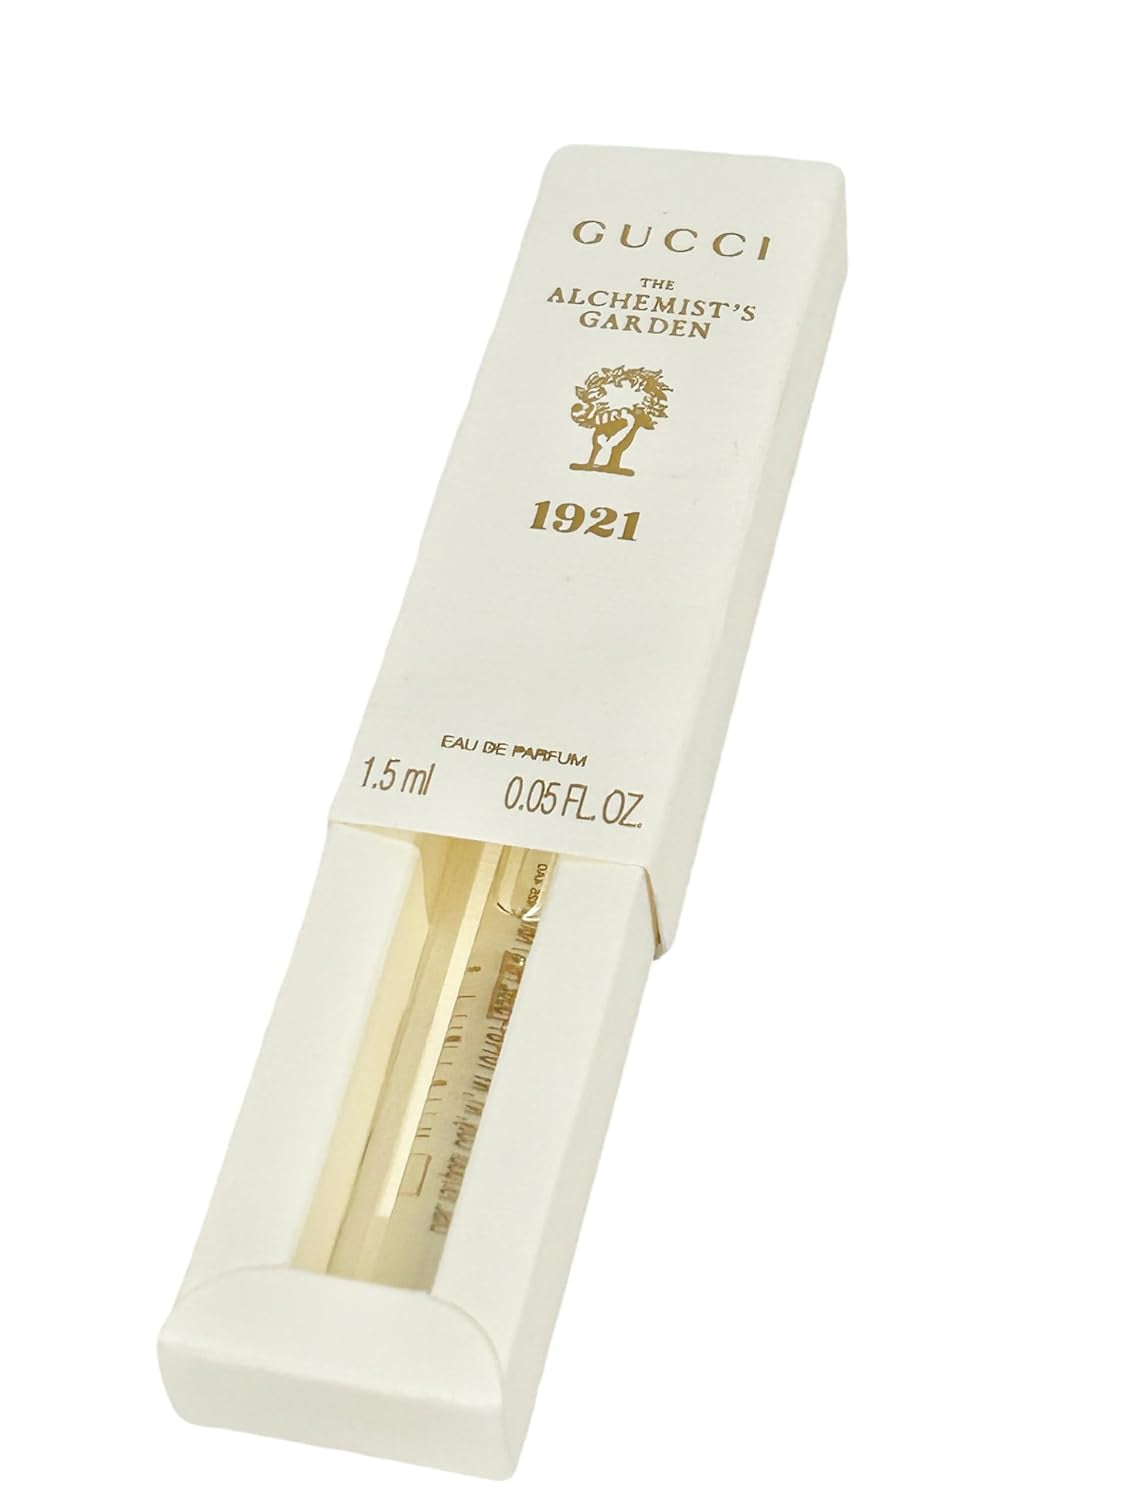 Gucci The Alchemist's Garden 1921 Sample Perfume Splash 1.5 ml / 0.05 oz (1 sample) unisex